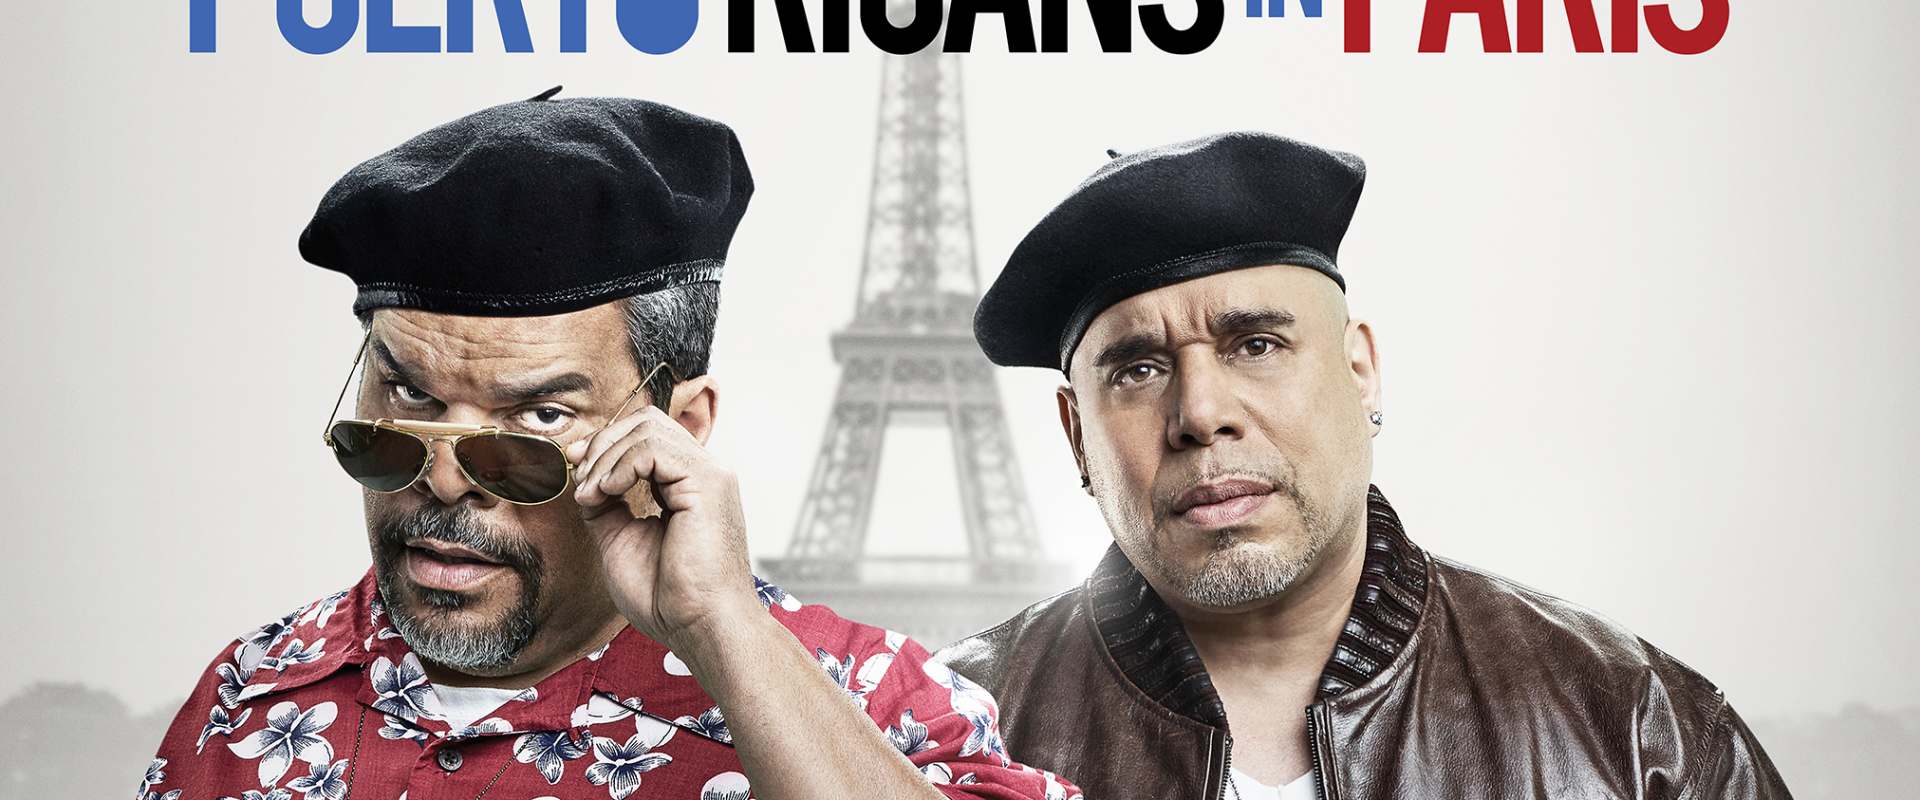 Puerto Ricans in Paris background 1